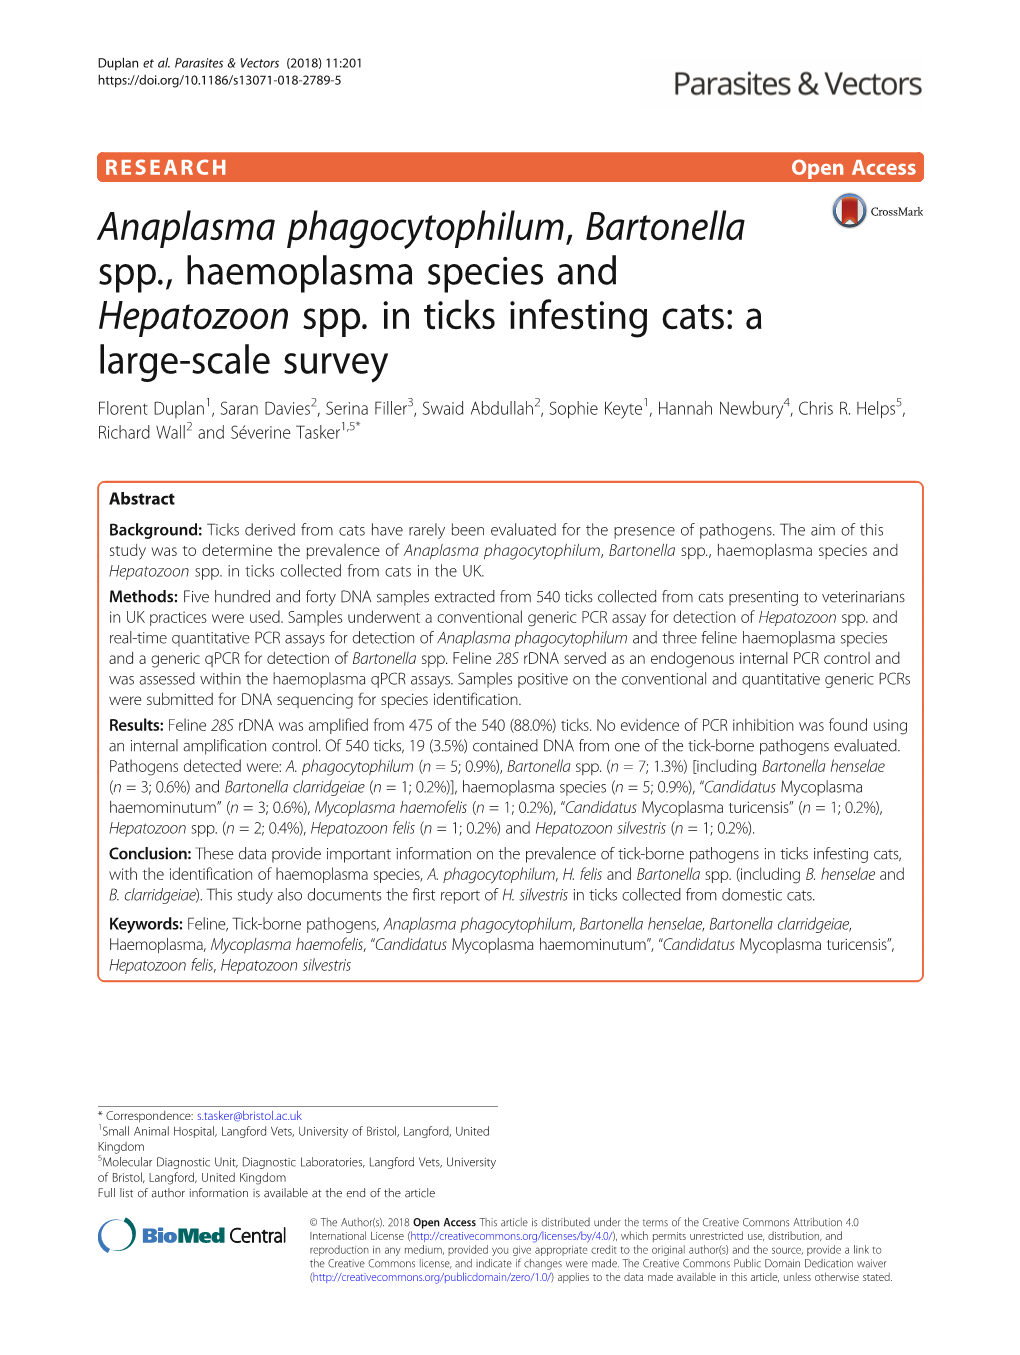 Anaplasma Phagocytophilum, Bartonella Spp., Haemoplasma Species and Hepatozoon Spp